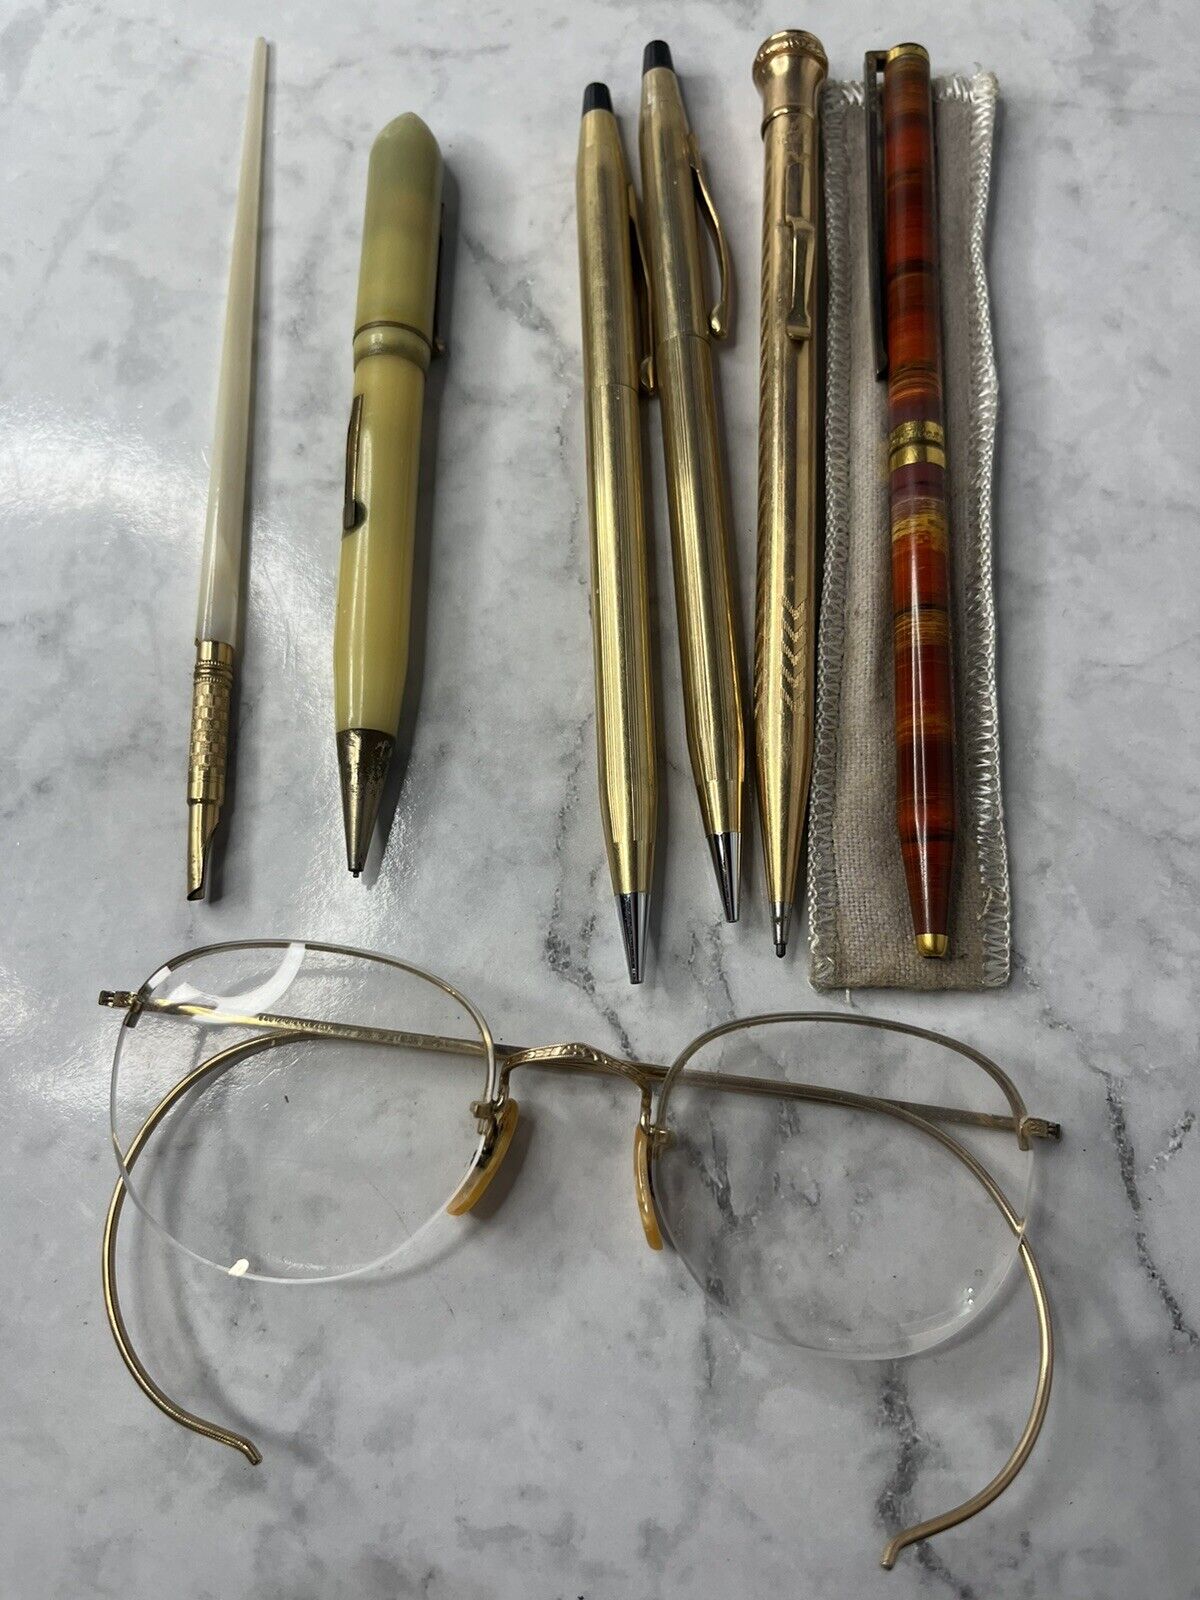 ST DuPont Enameled Pen Gold filled Cross Pencil 14k gf Fountain pen Spectacles